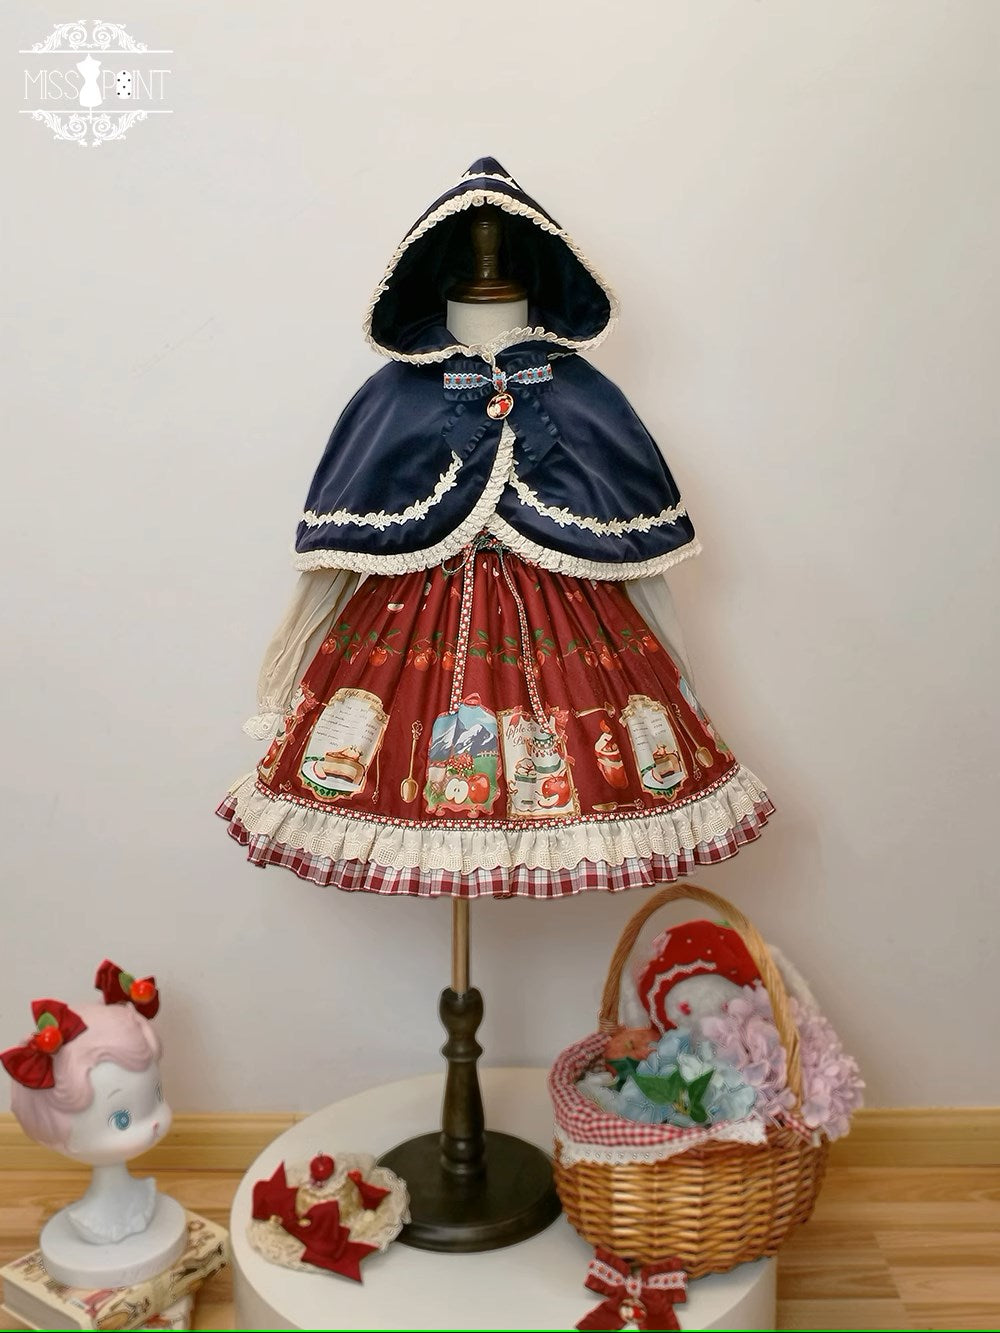 Kids size [Sale period ended] Apple Garden Bavarian style jumper skirt/blouse/cloak